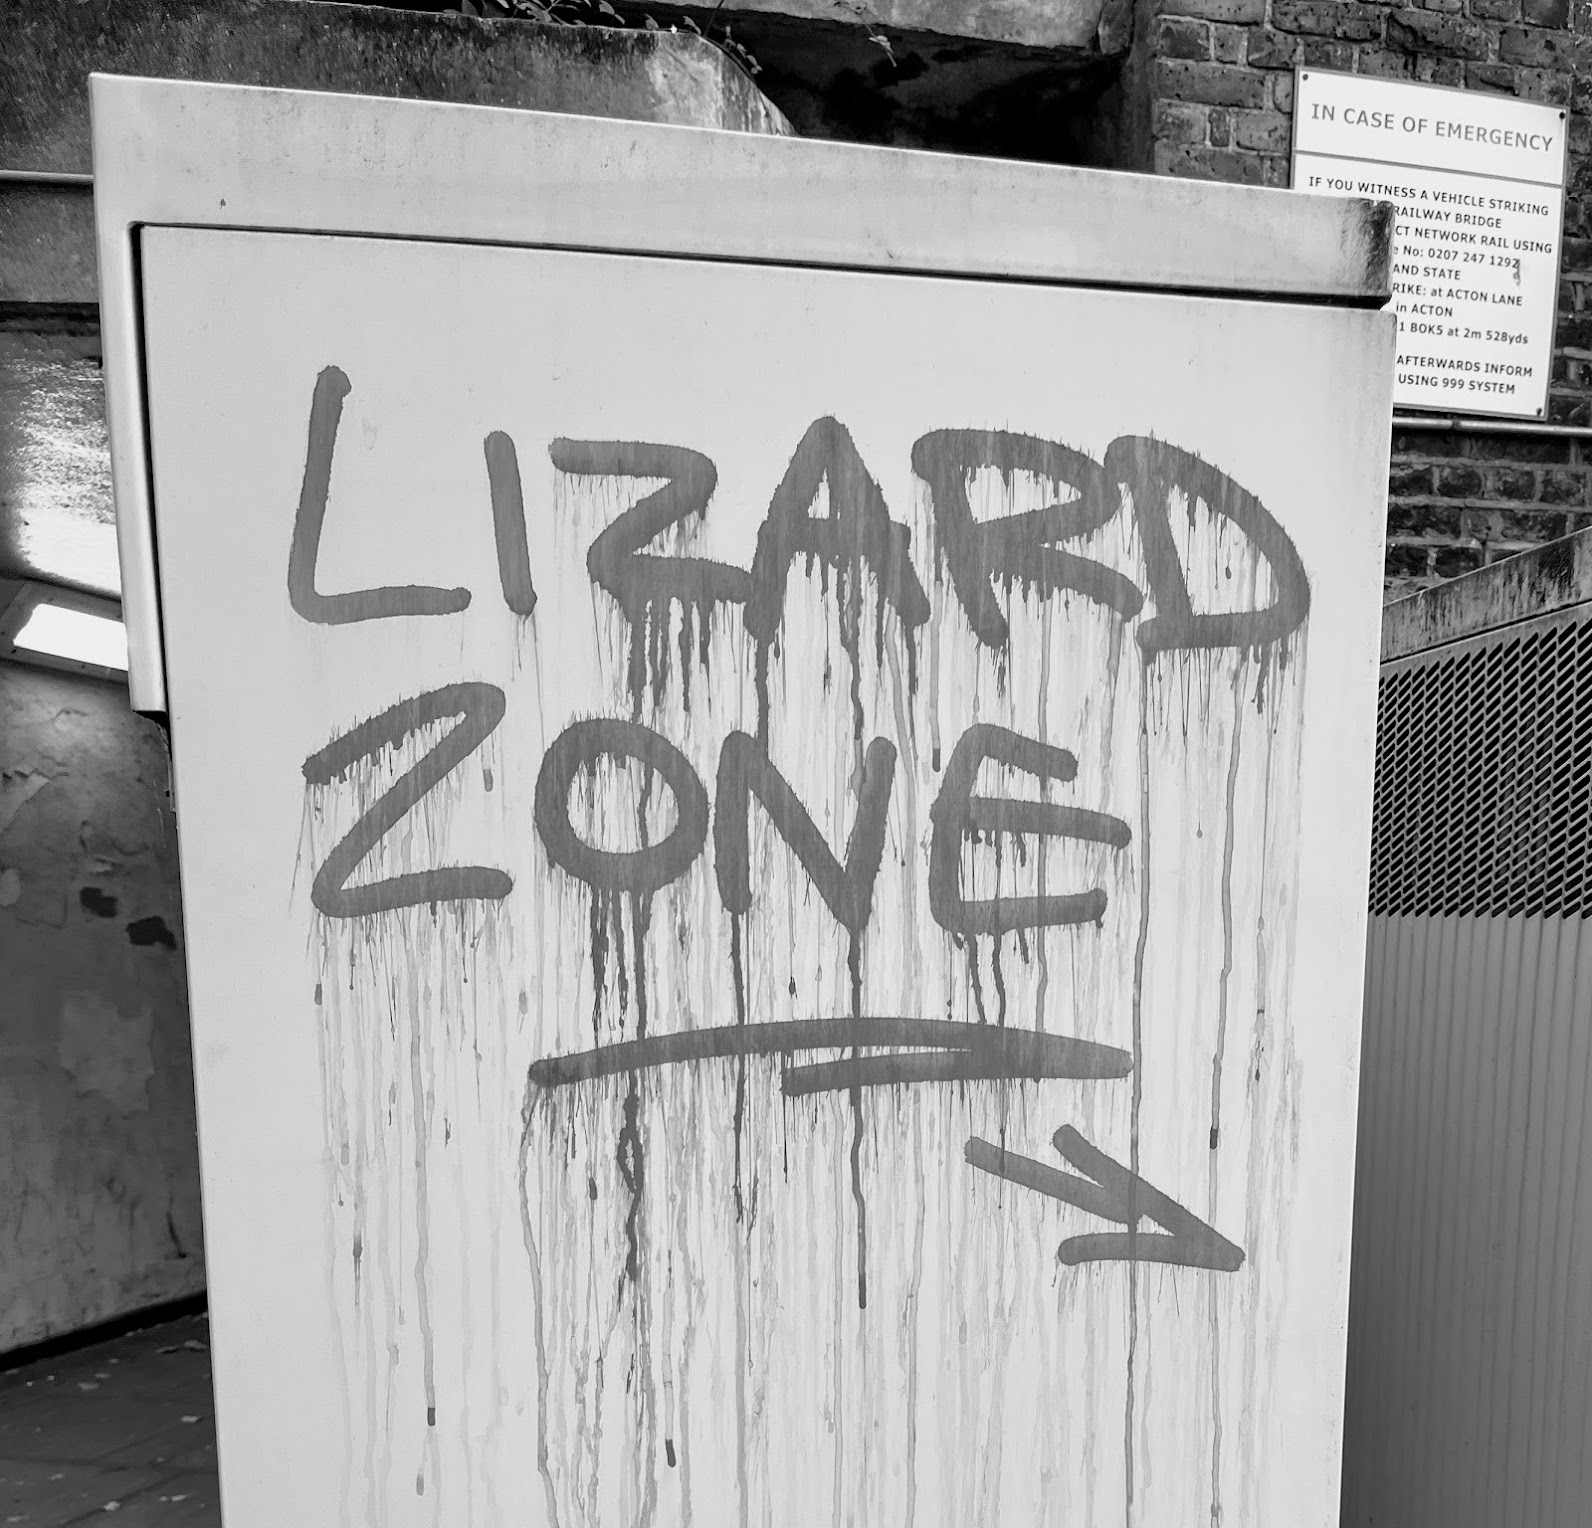 Graffiti reading 'Lizard Zone'